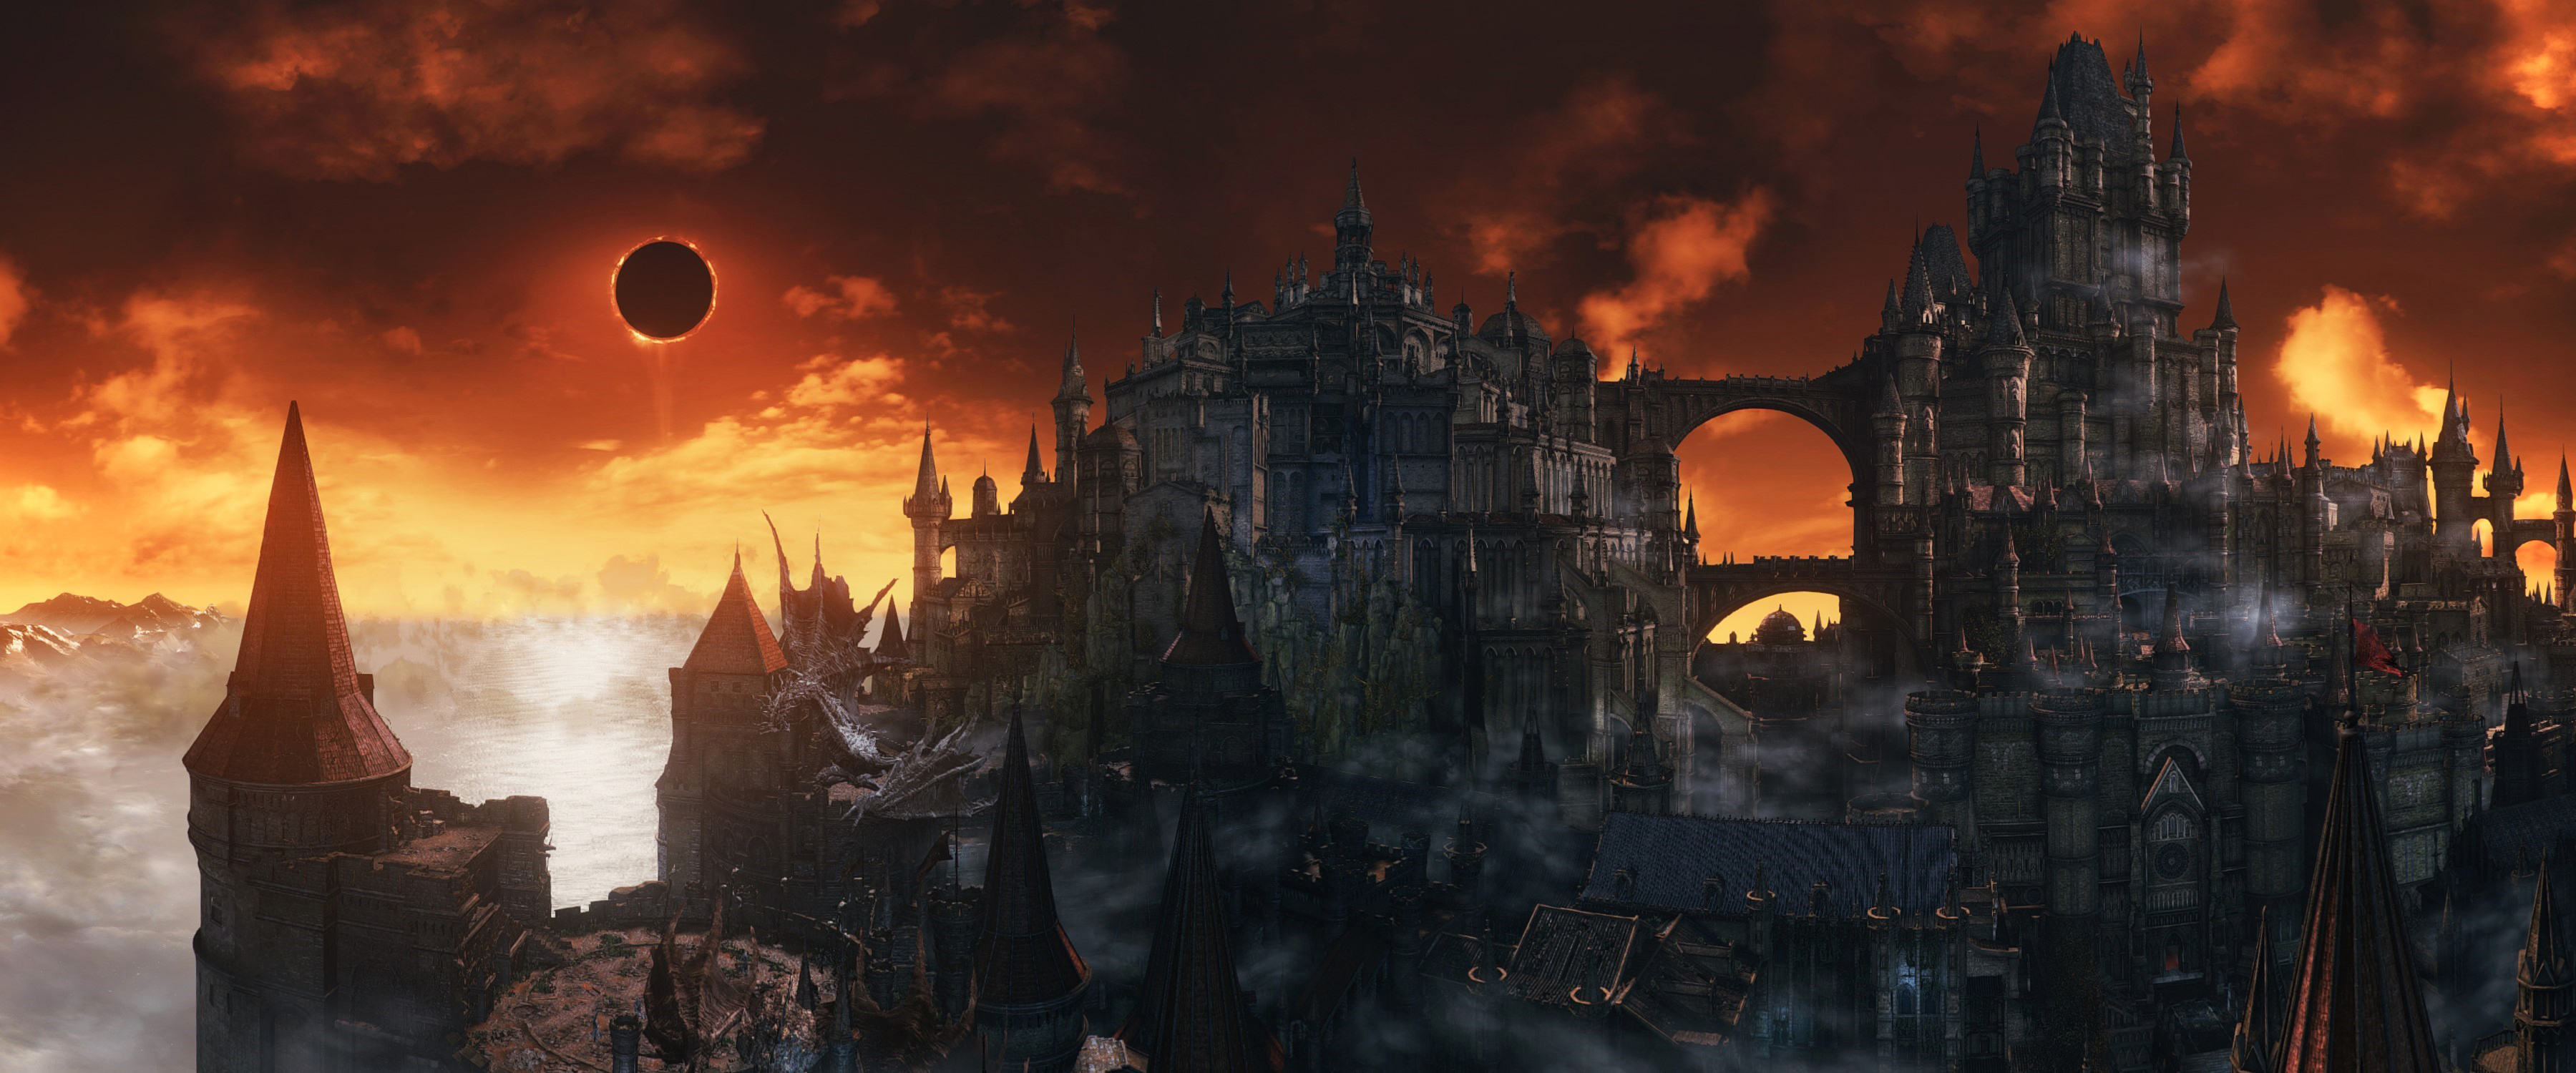 Castle City Dark Souls Iii Dragon Eclipse 3600x1500